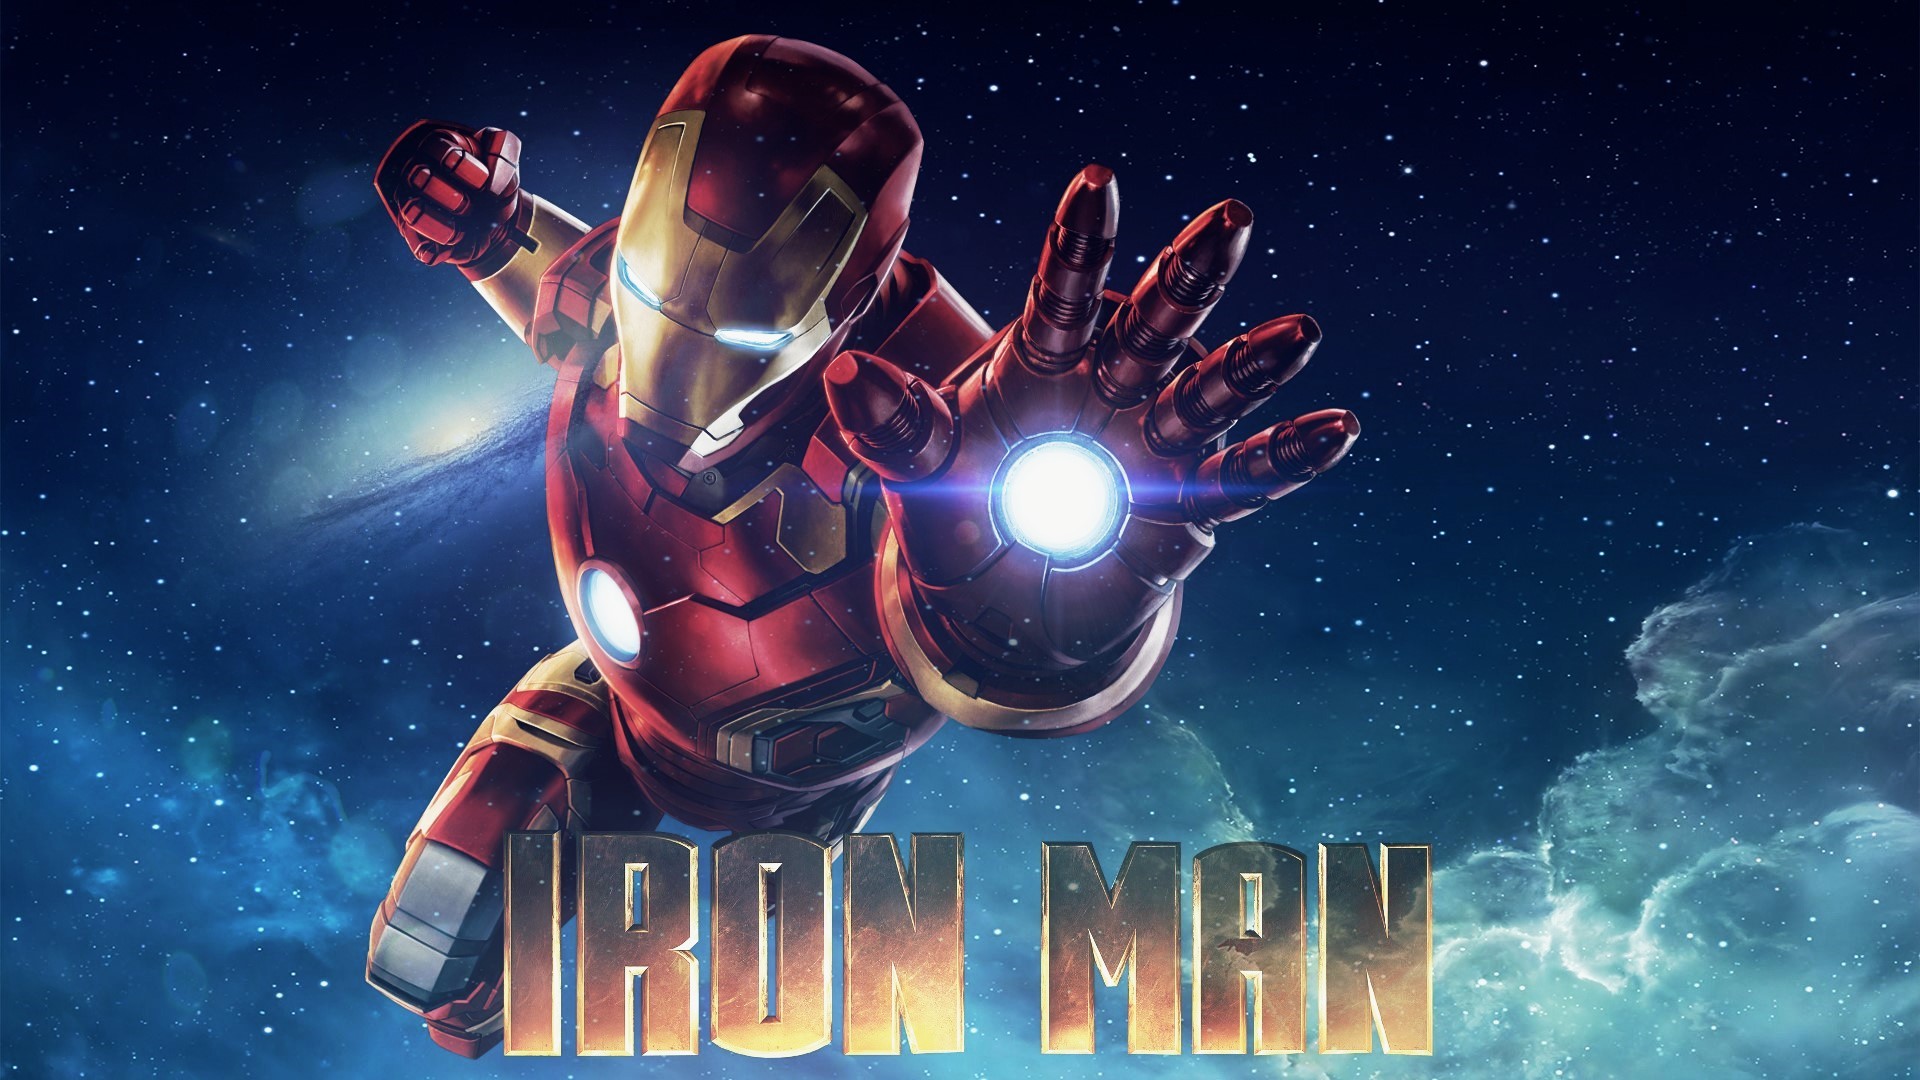 Iron Man Iron Man 3 Iron Man 2 Tony Stark Galaxy Spiral Galaxy Flares Marvel Cinematic Universe 1920x1080